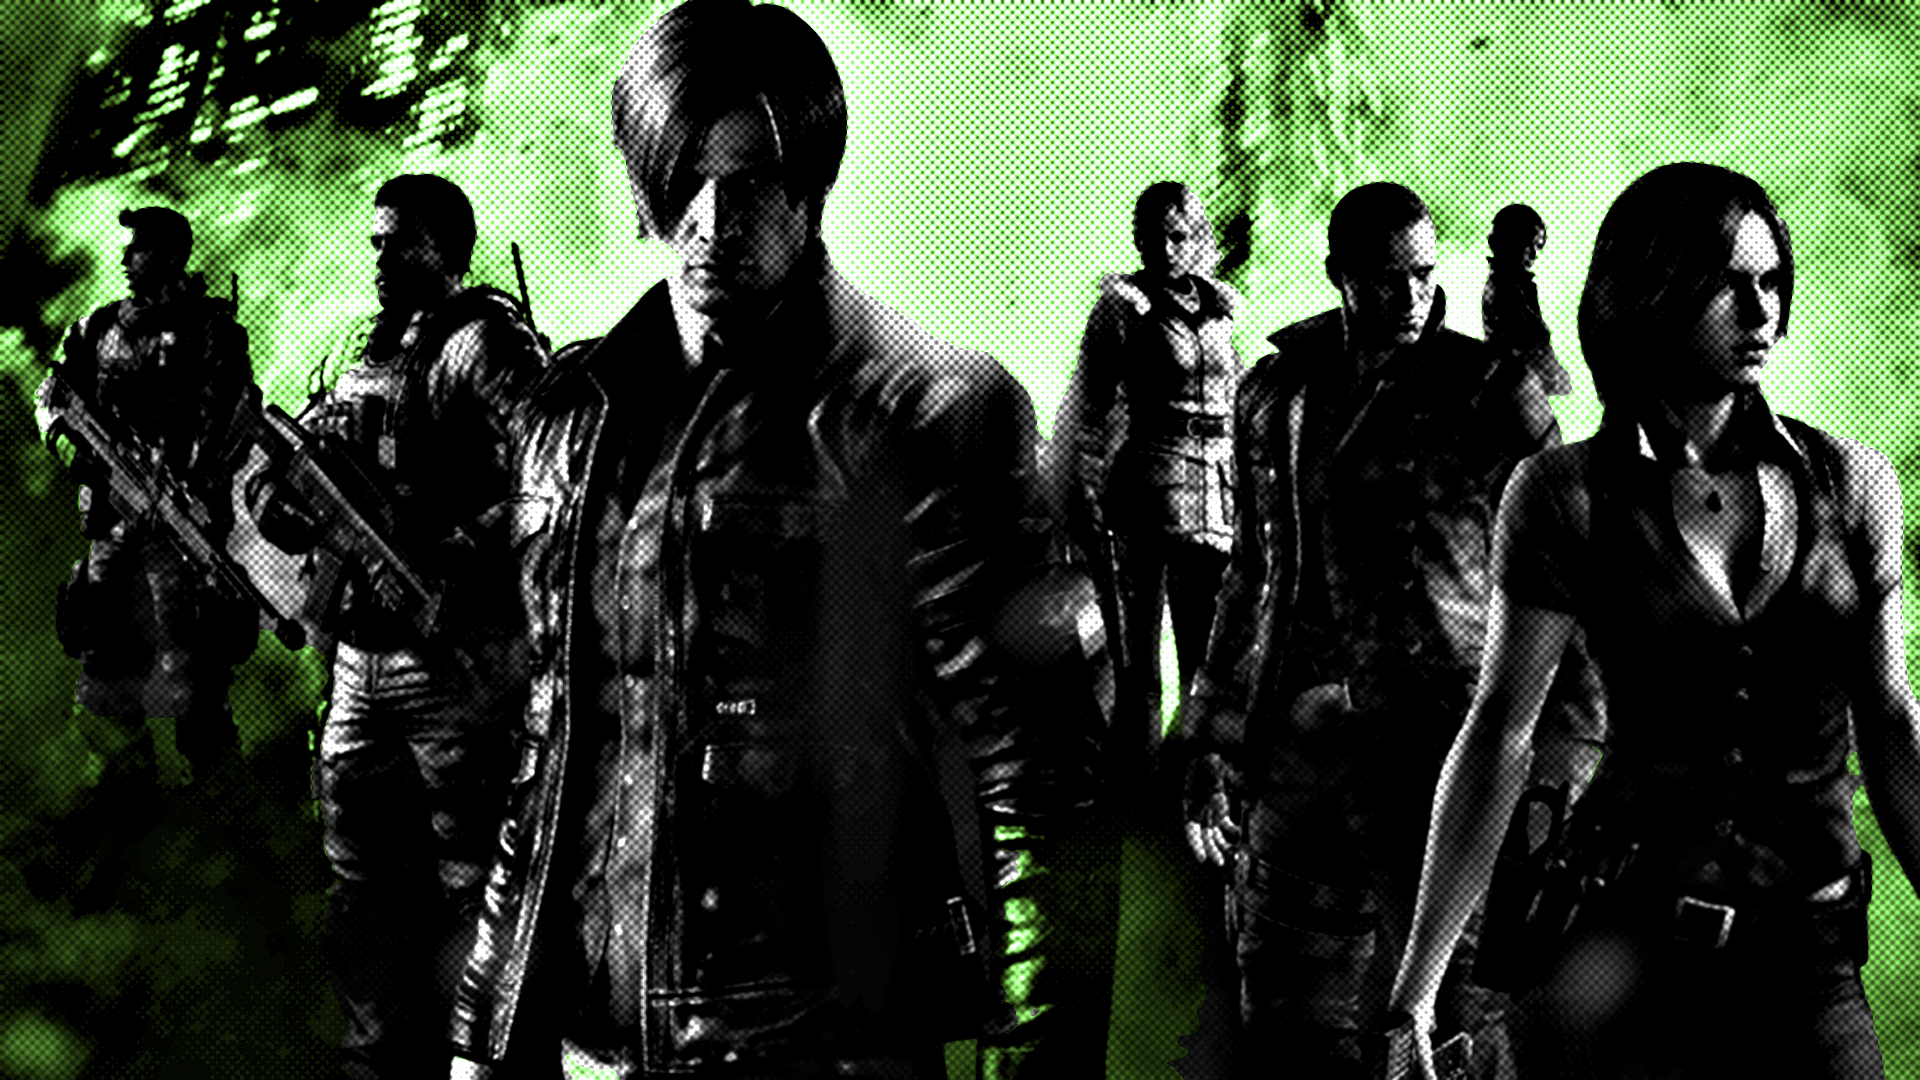 The cast of Resident Evil 6